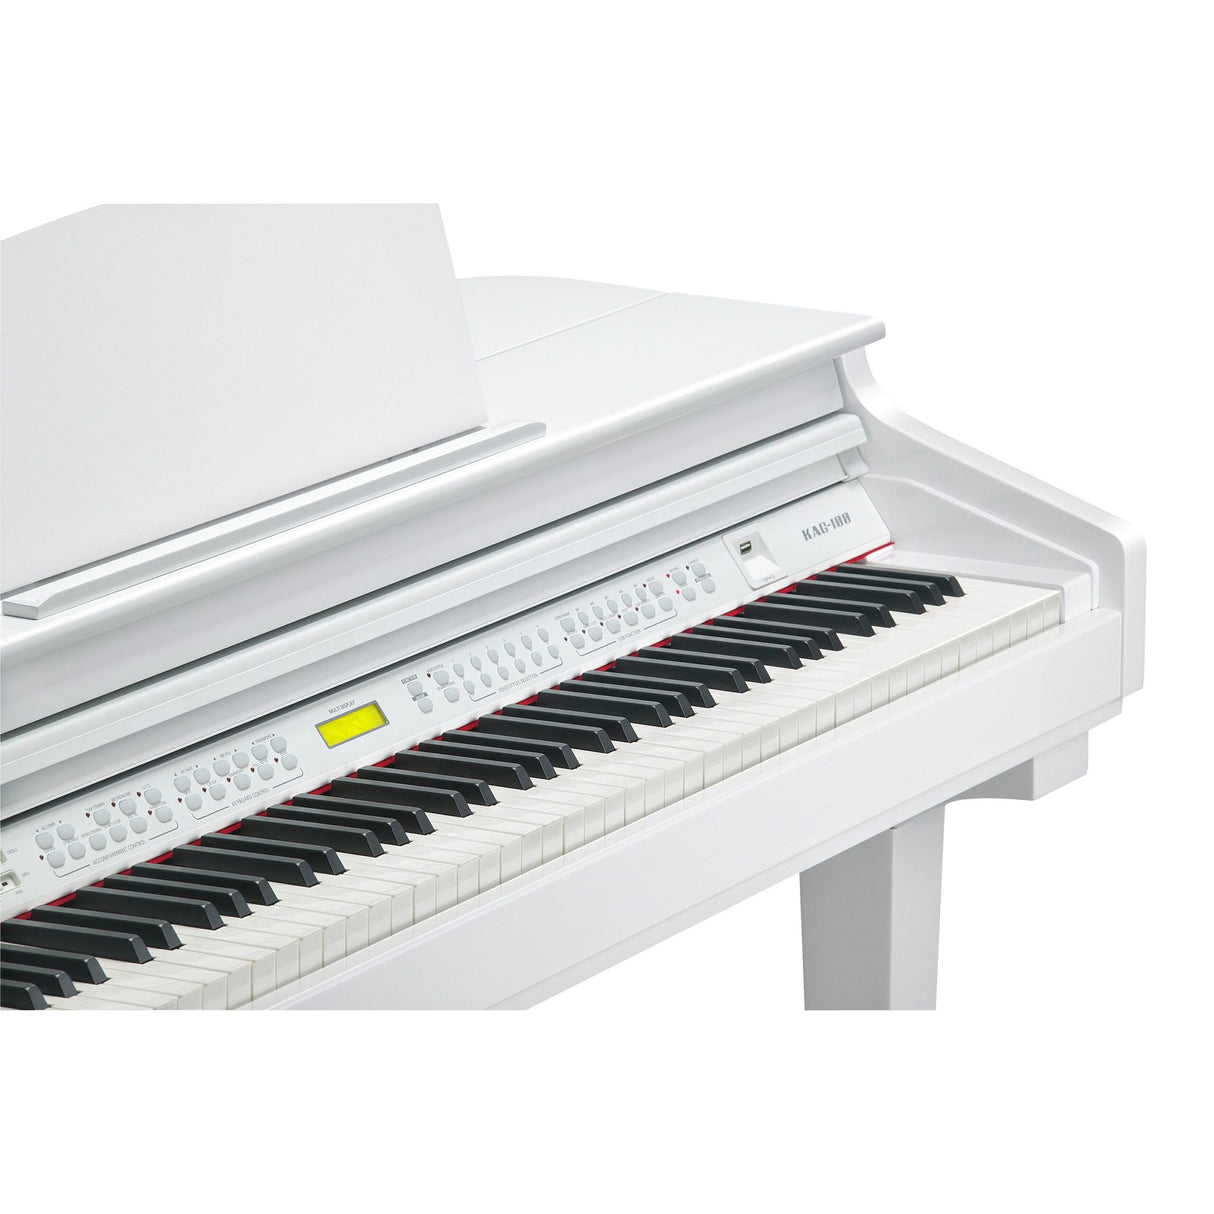 Kurzweil KAG-100 88-Key Fully-Weighted Action Digital Grand Piano, White Polish